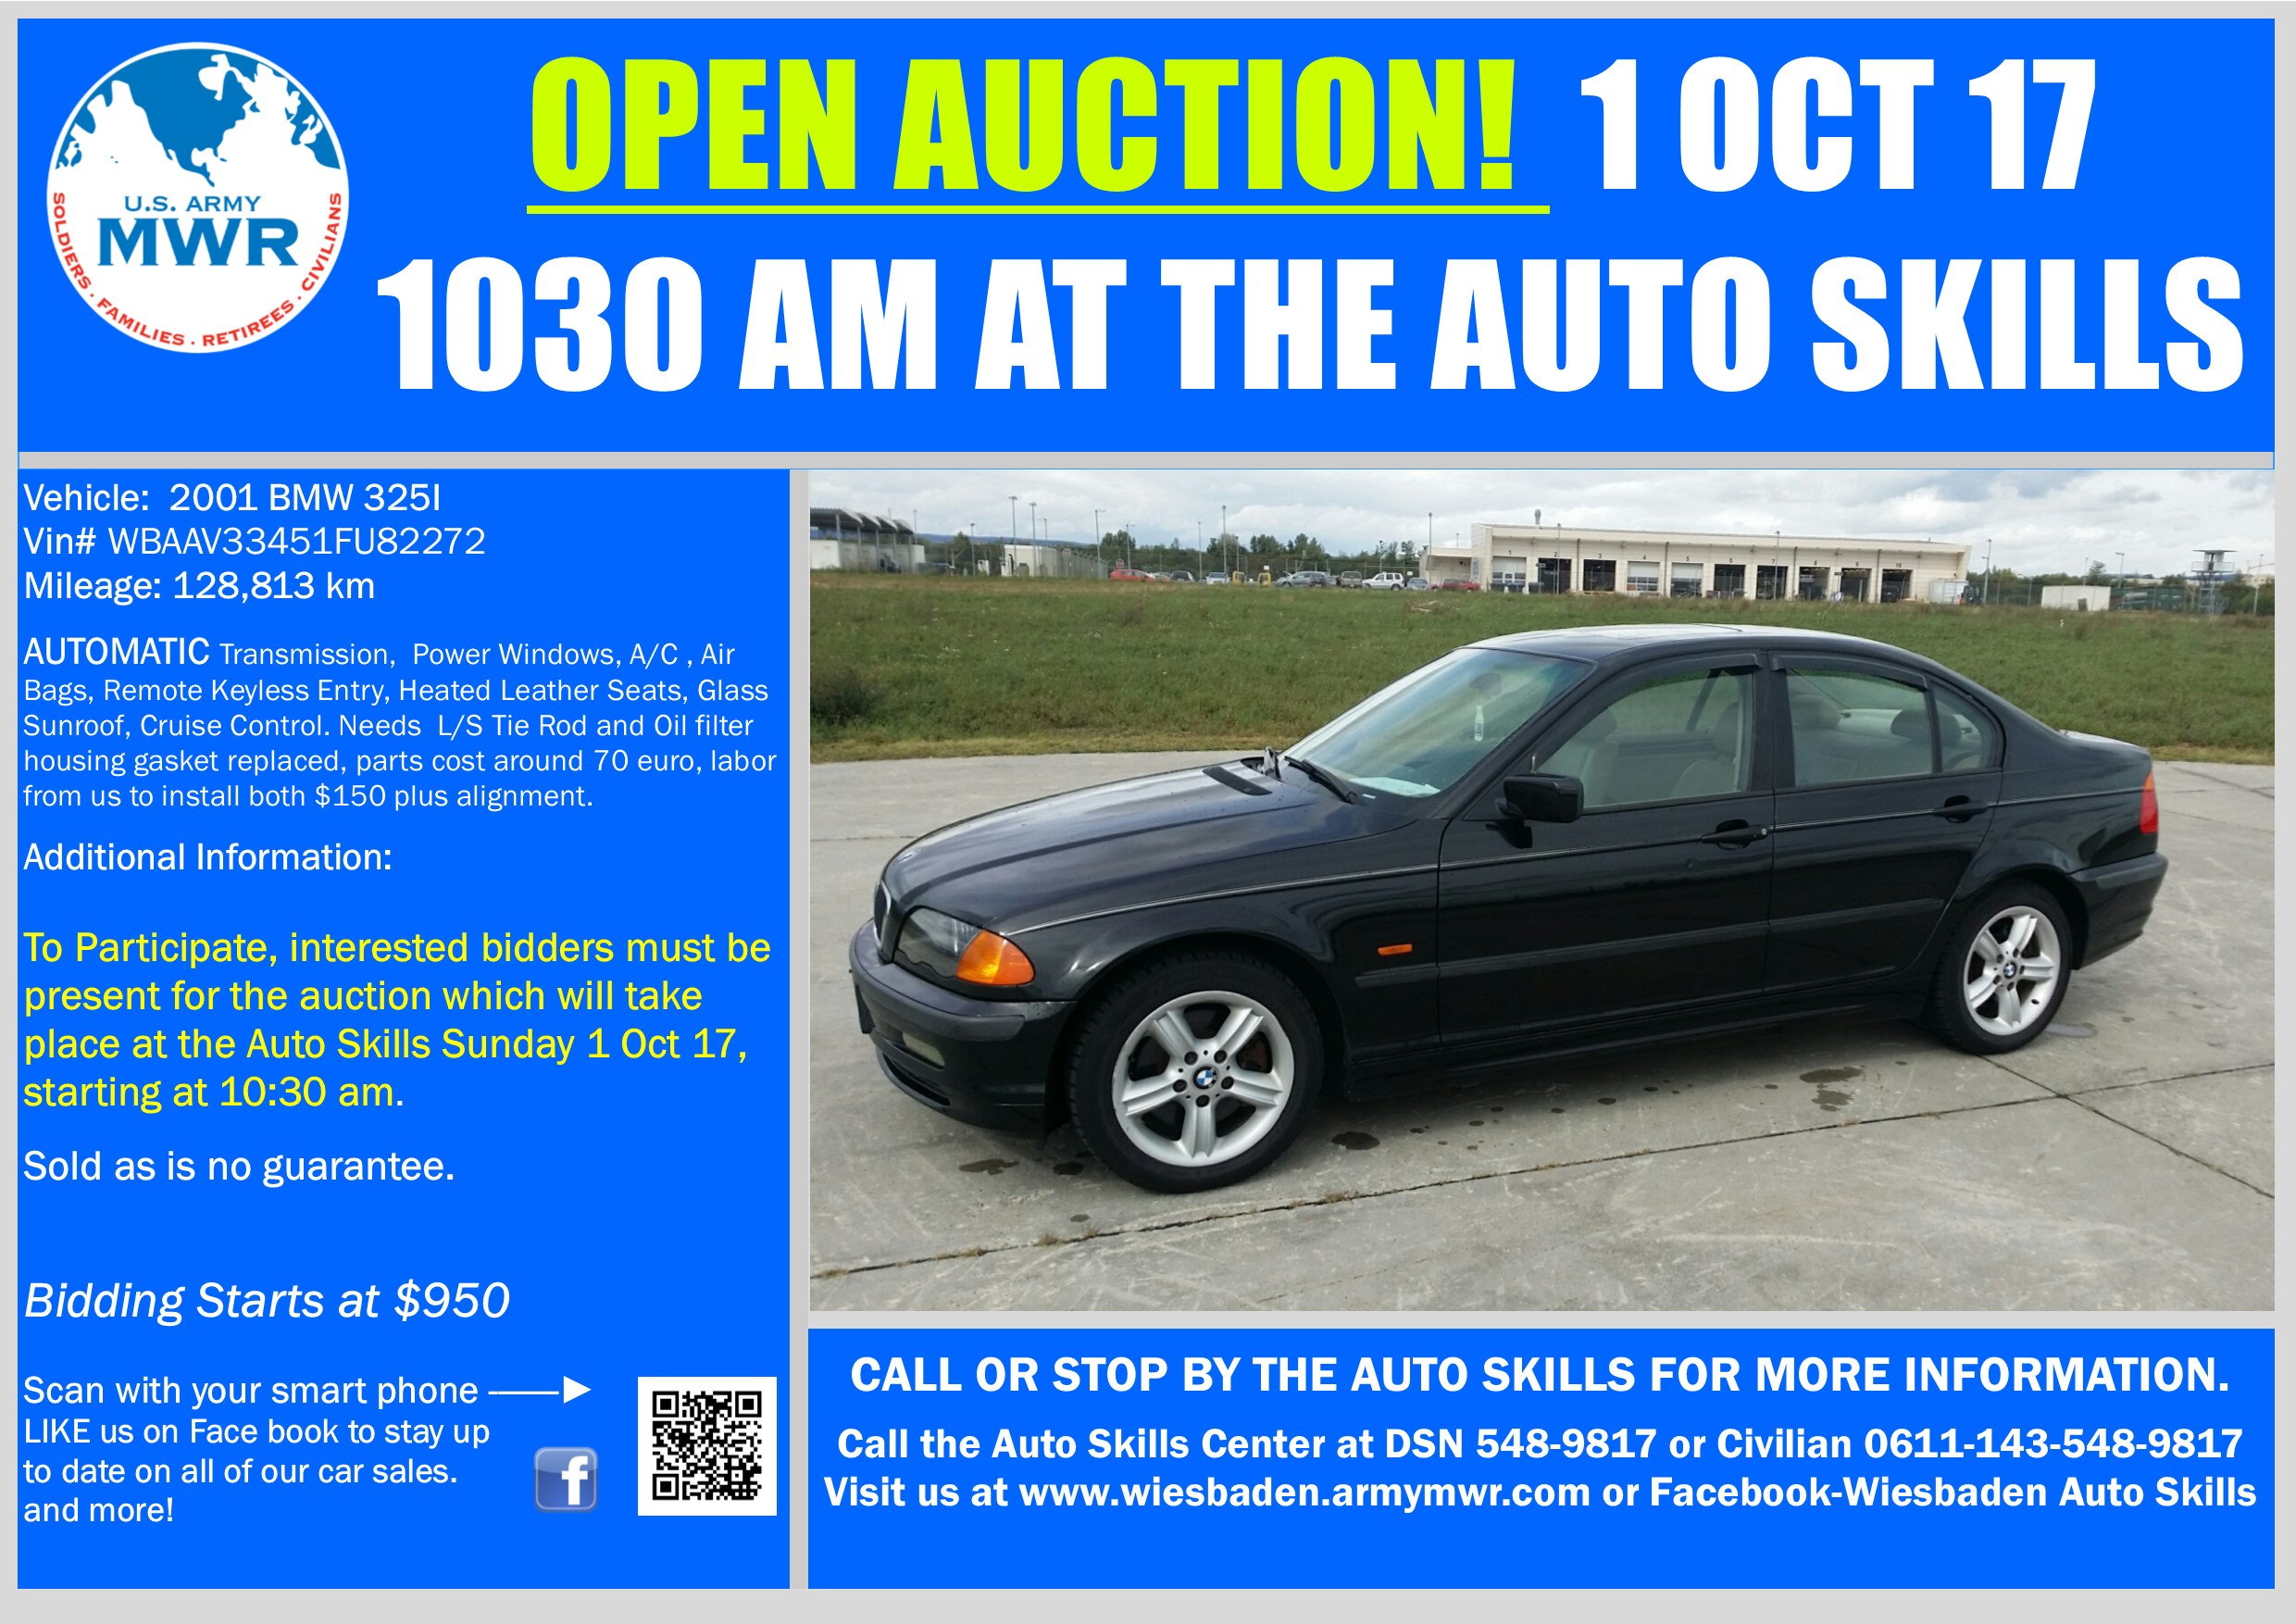 Sale_BMW 325  1 Oct 17 Open Auction.jpg